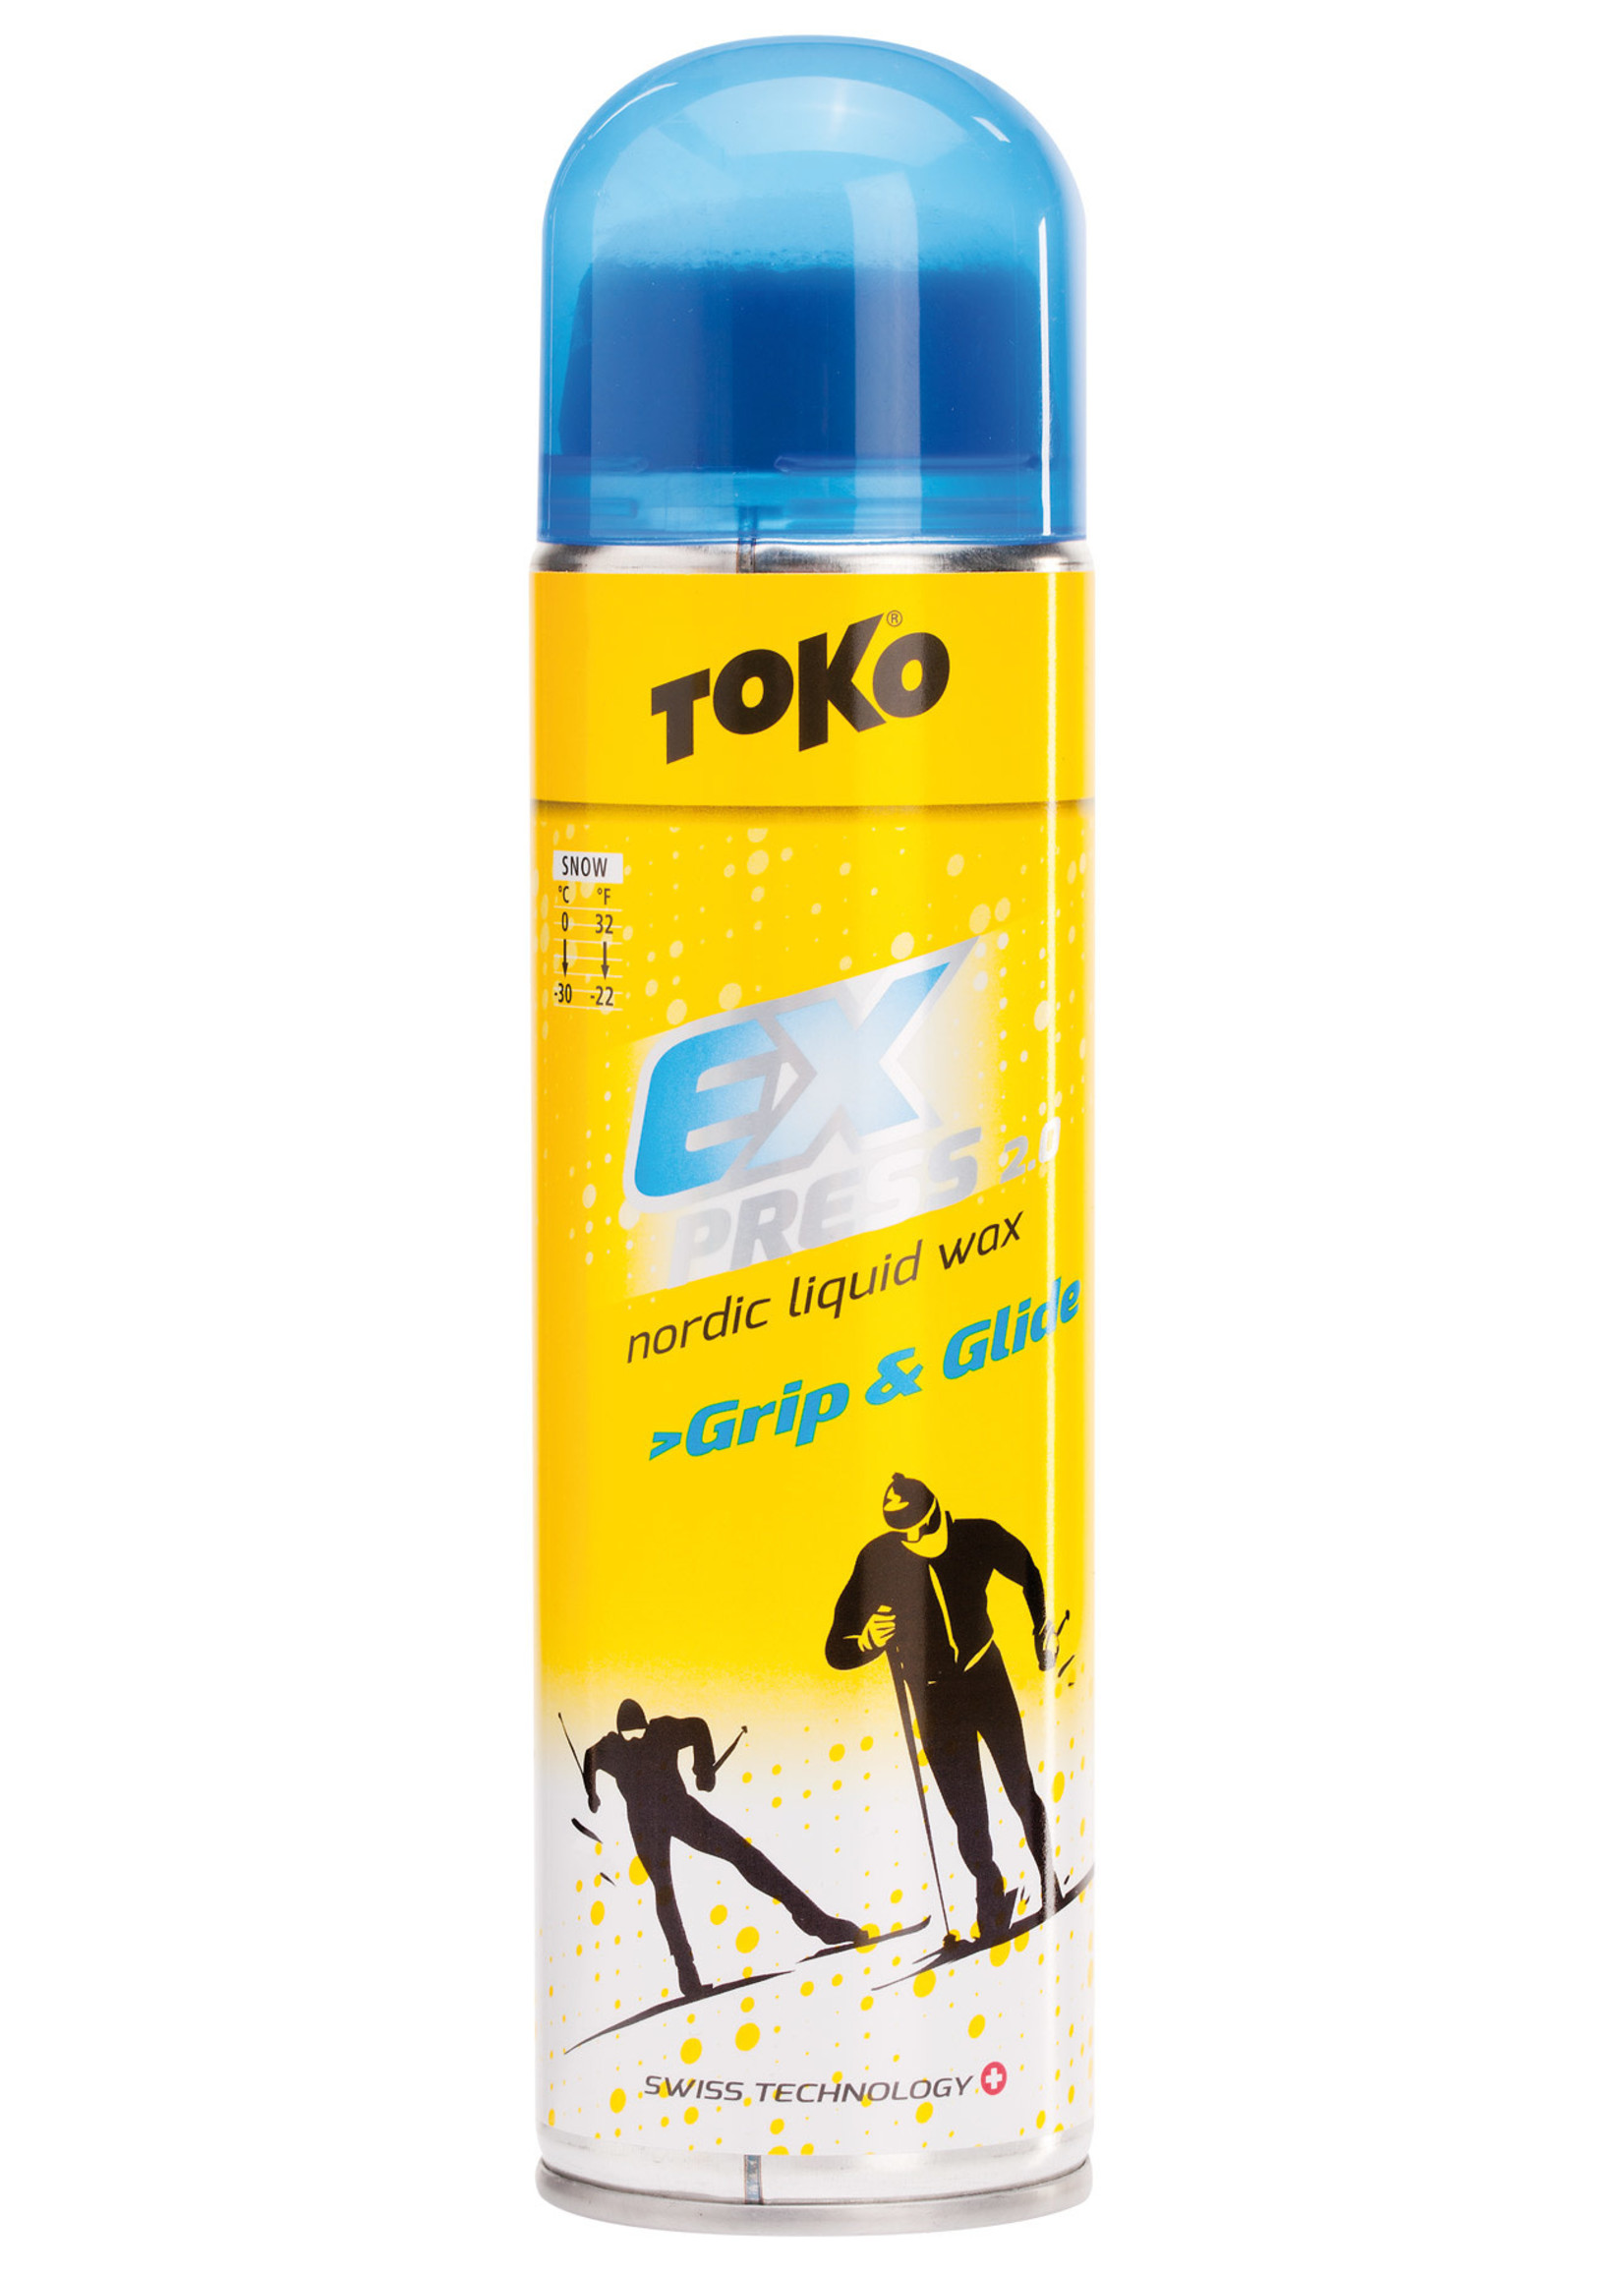 Toko Toko Express Nordic Liquid Wax Grip & Glide